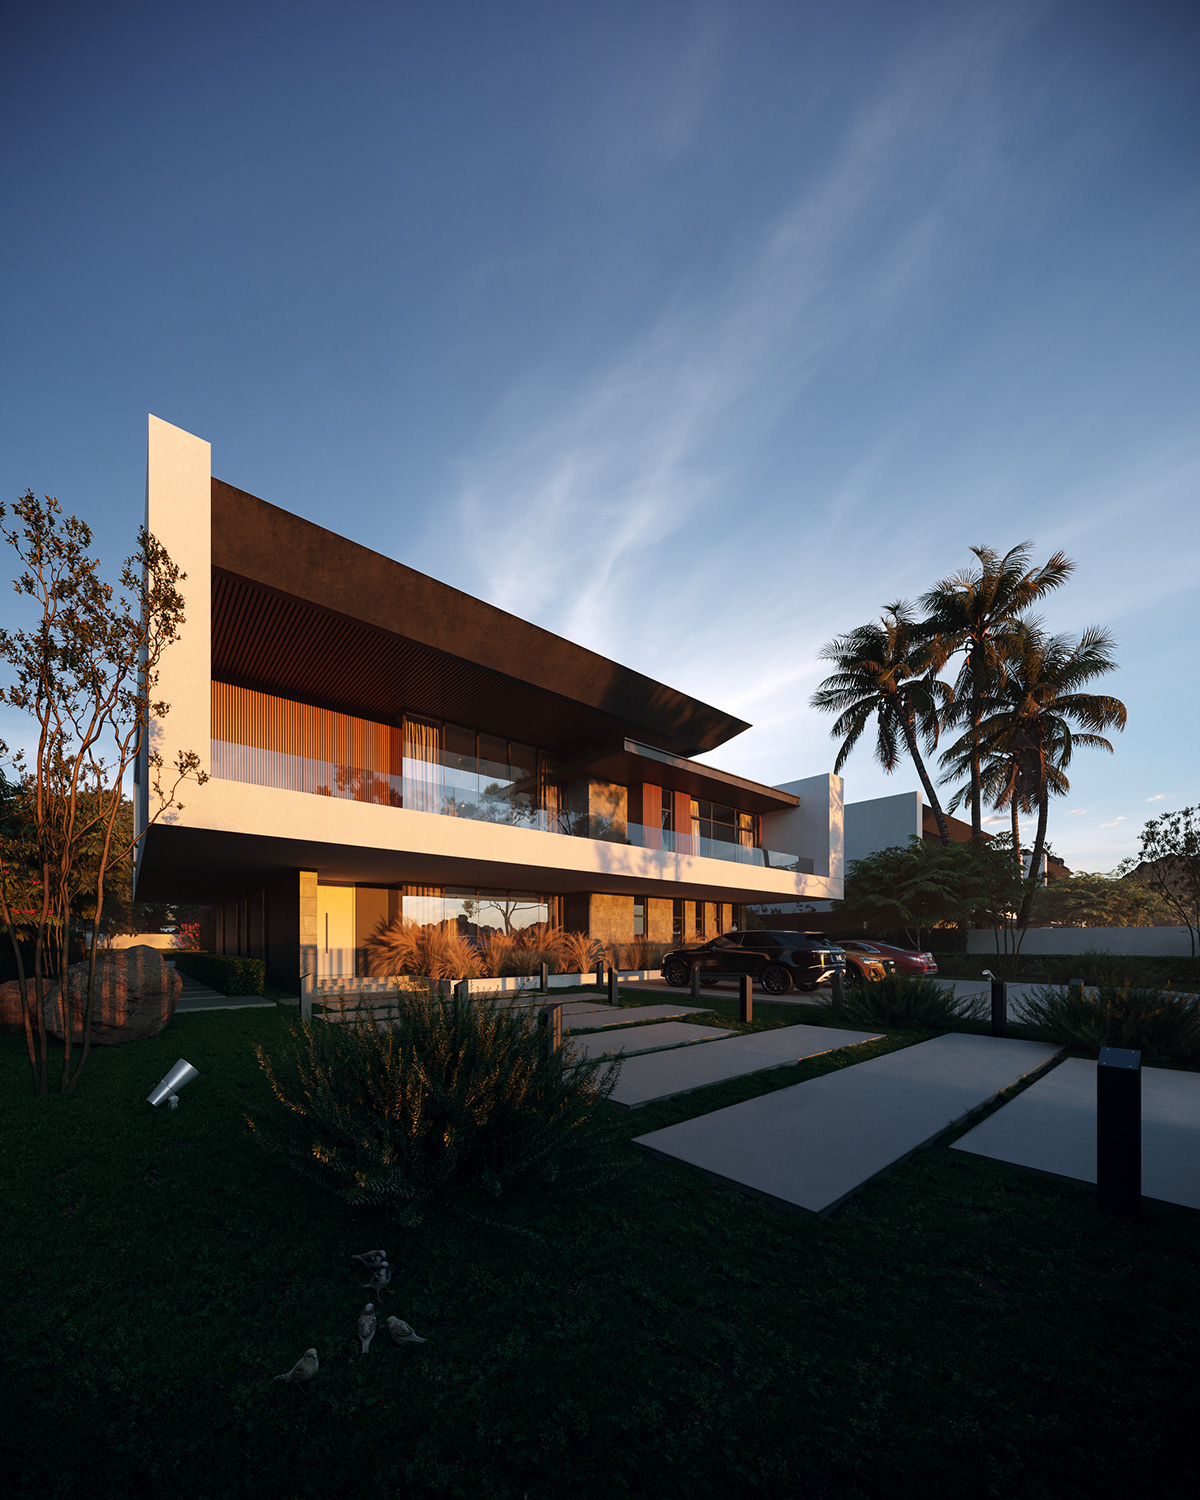 architecture Render CGI corona vray exterior archviz 3D Rendering 3ds max house